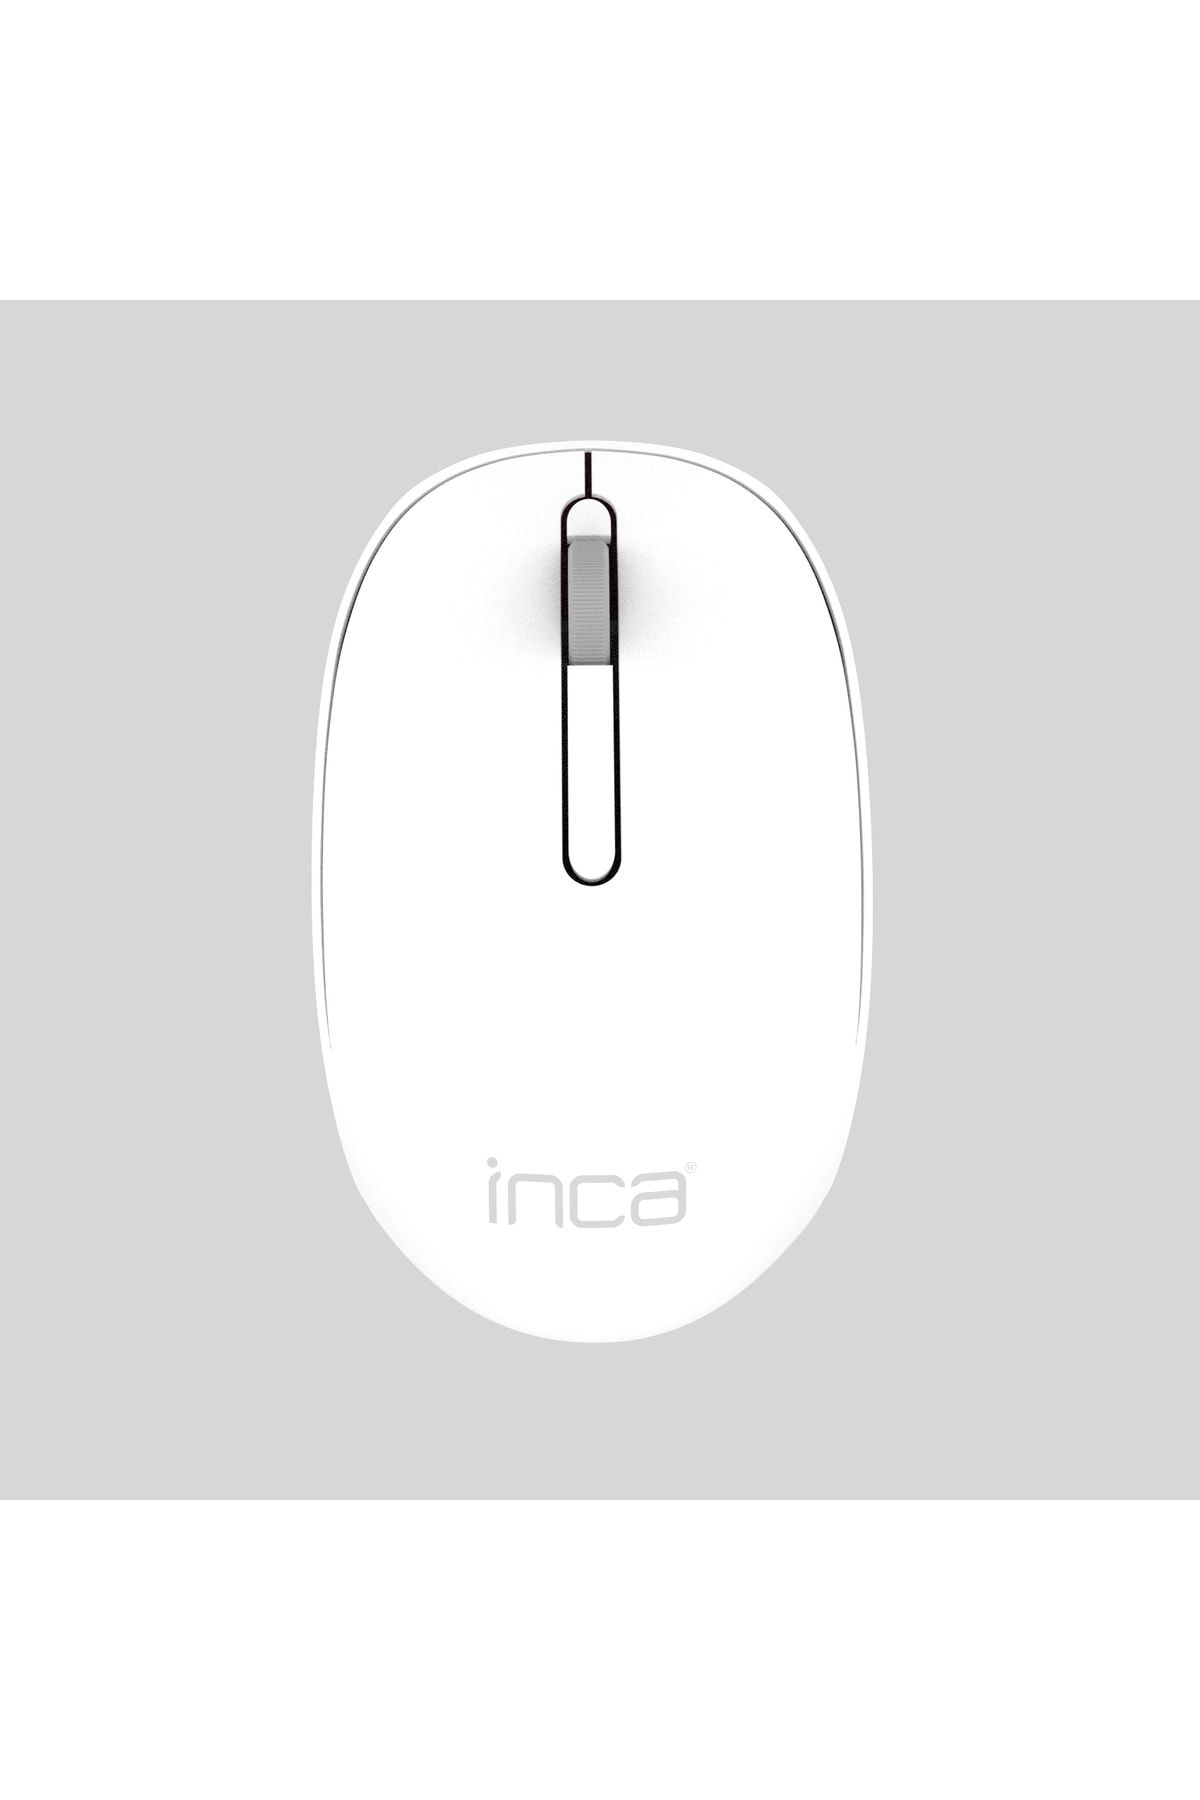 Inca Kablosuz Mouse Iwm-241rb Candy Desing 3d Wireless Mouse